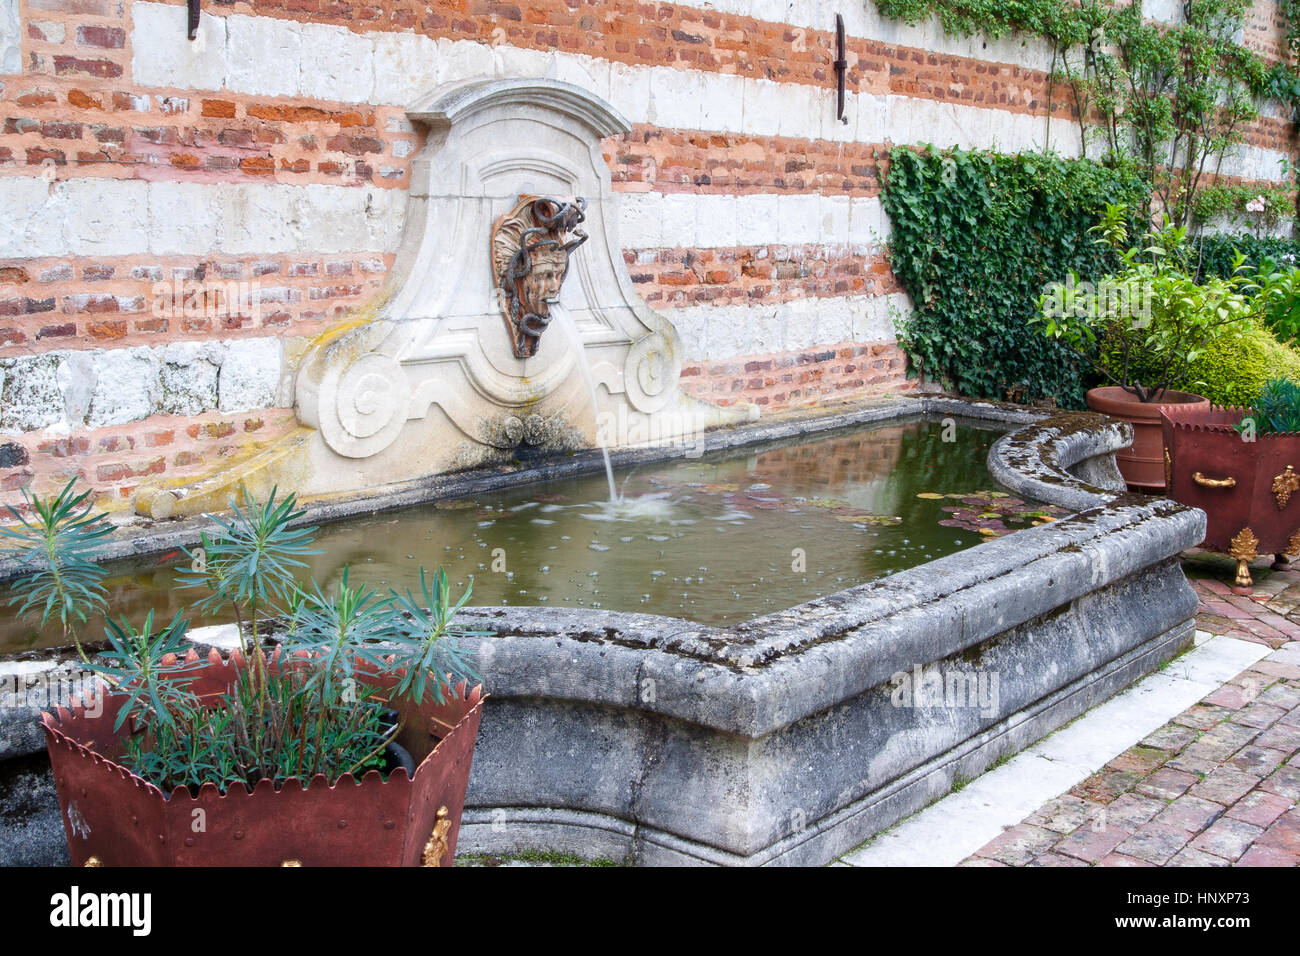 Fountain in Maizicourt Gardens (Les Jardins de Maizicourt), Somme, France (obligatory mention of the garden name) Stock Photo